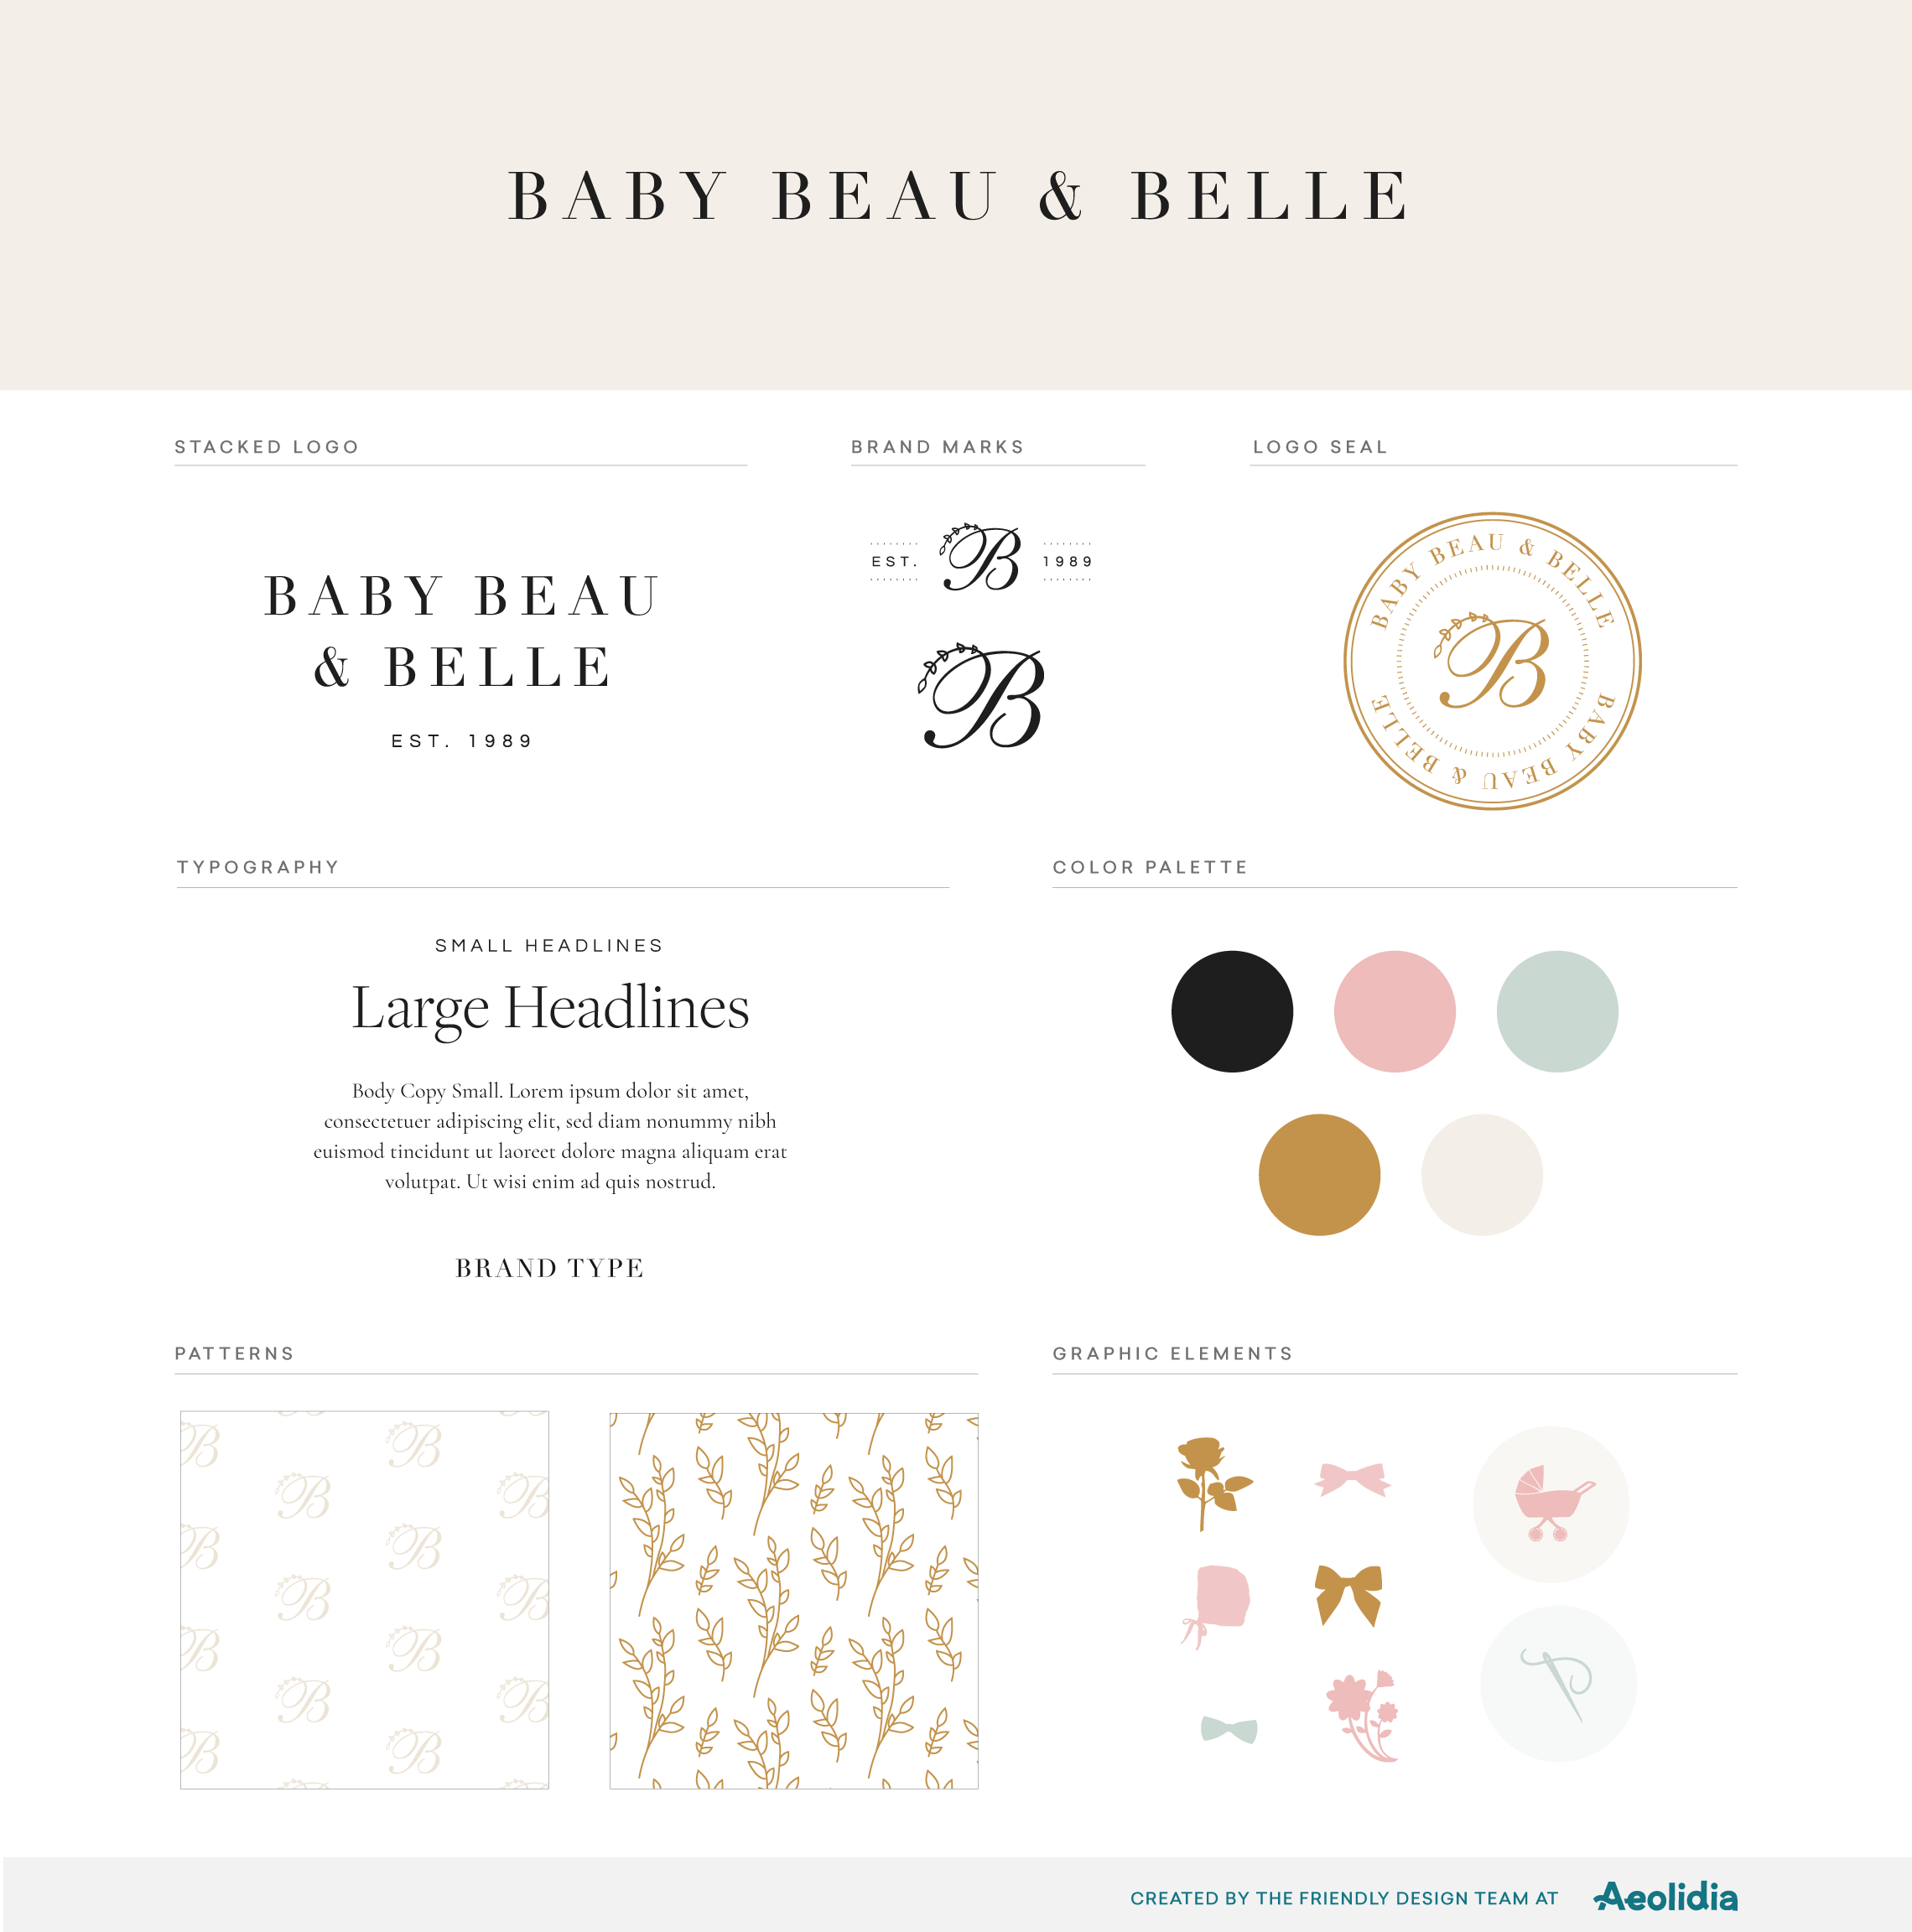 Brand design guide for handmade baby clothes company.